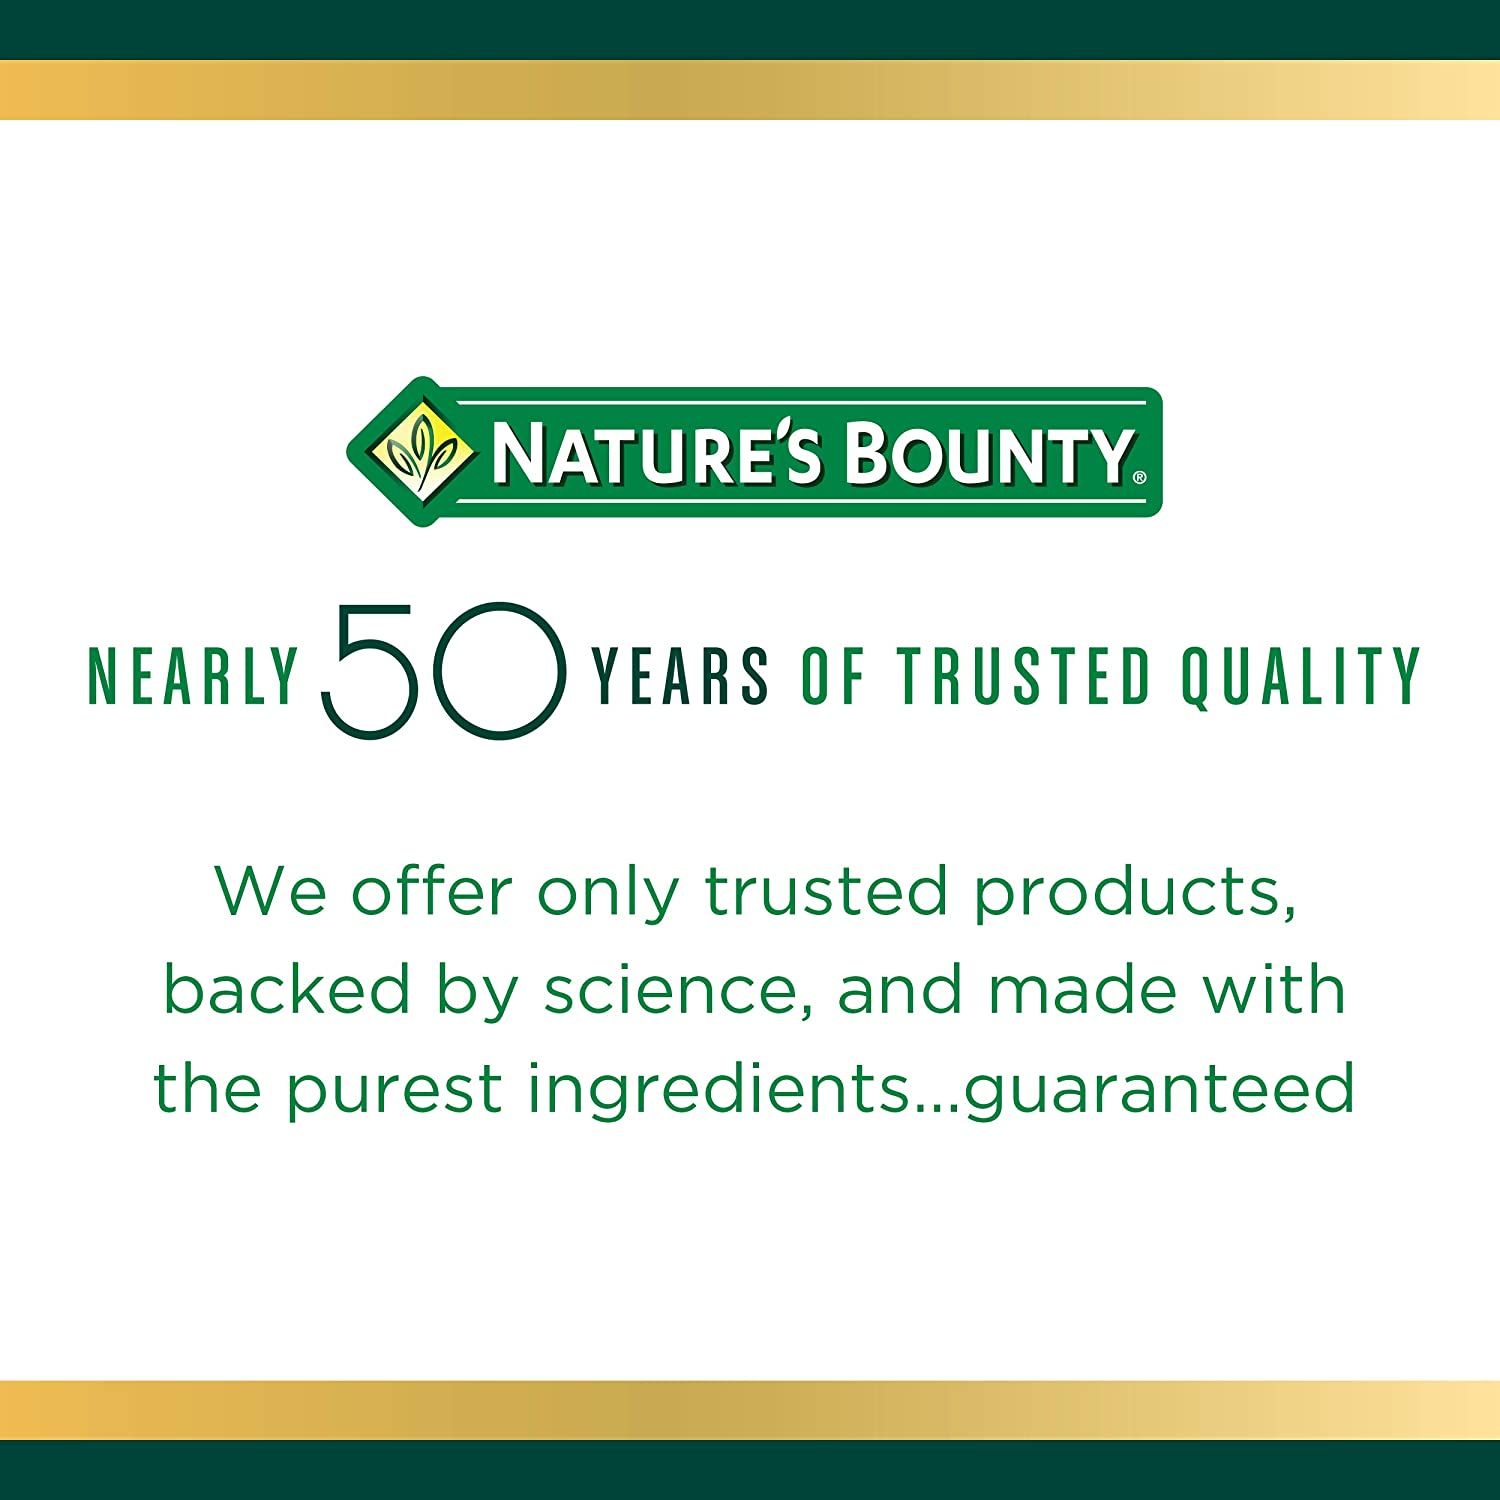 Nature's Bounty Ginger Root 550 mg Capsules - 100 ct